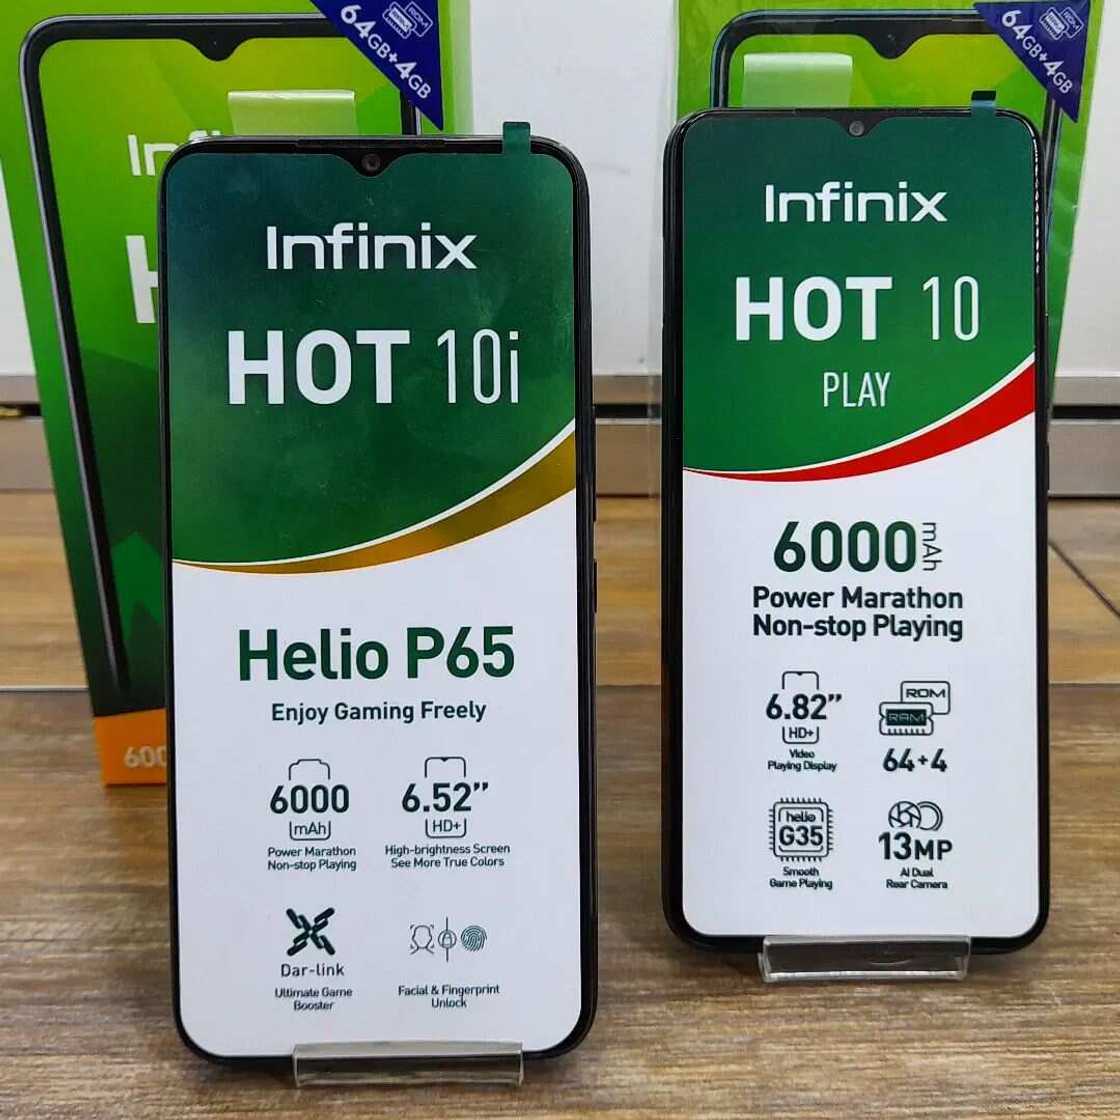 Latest Infinix phones and prices